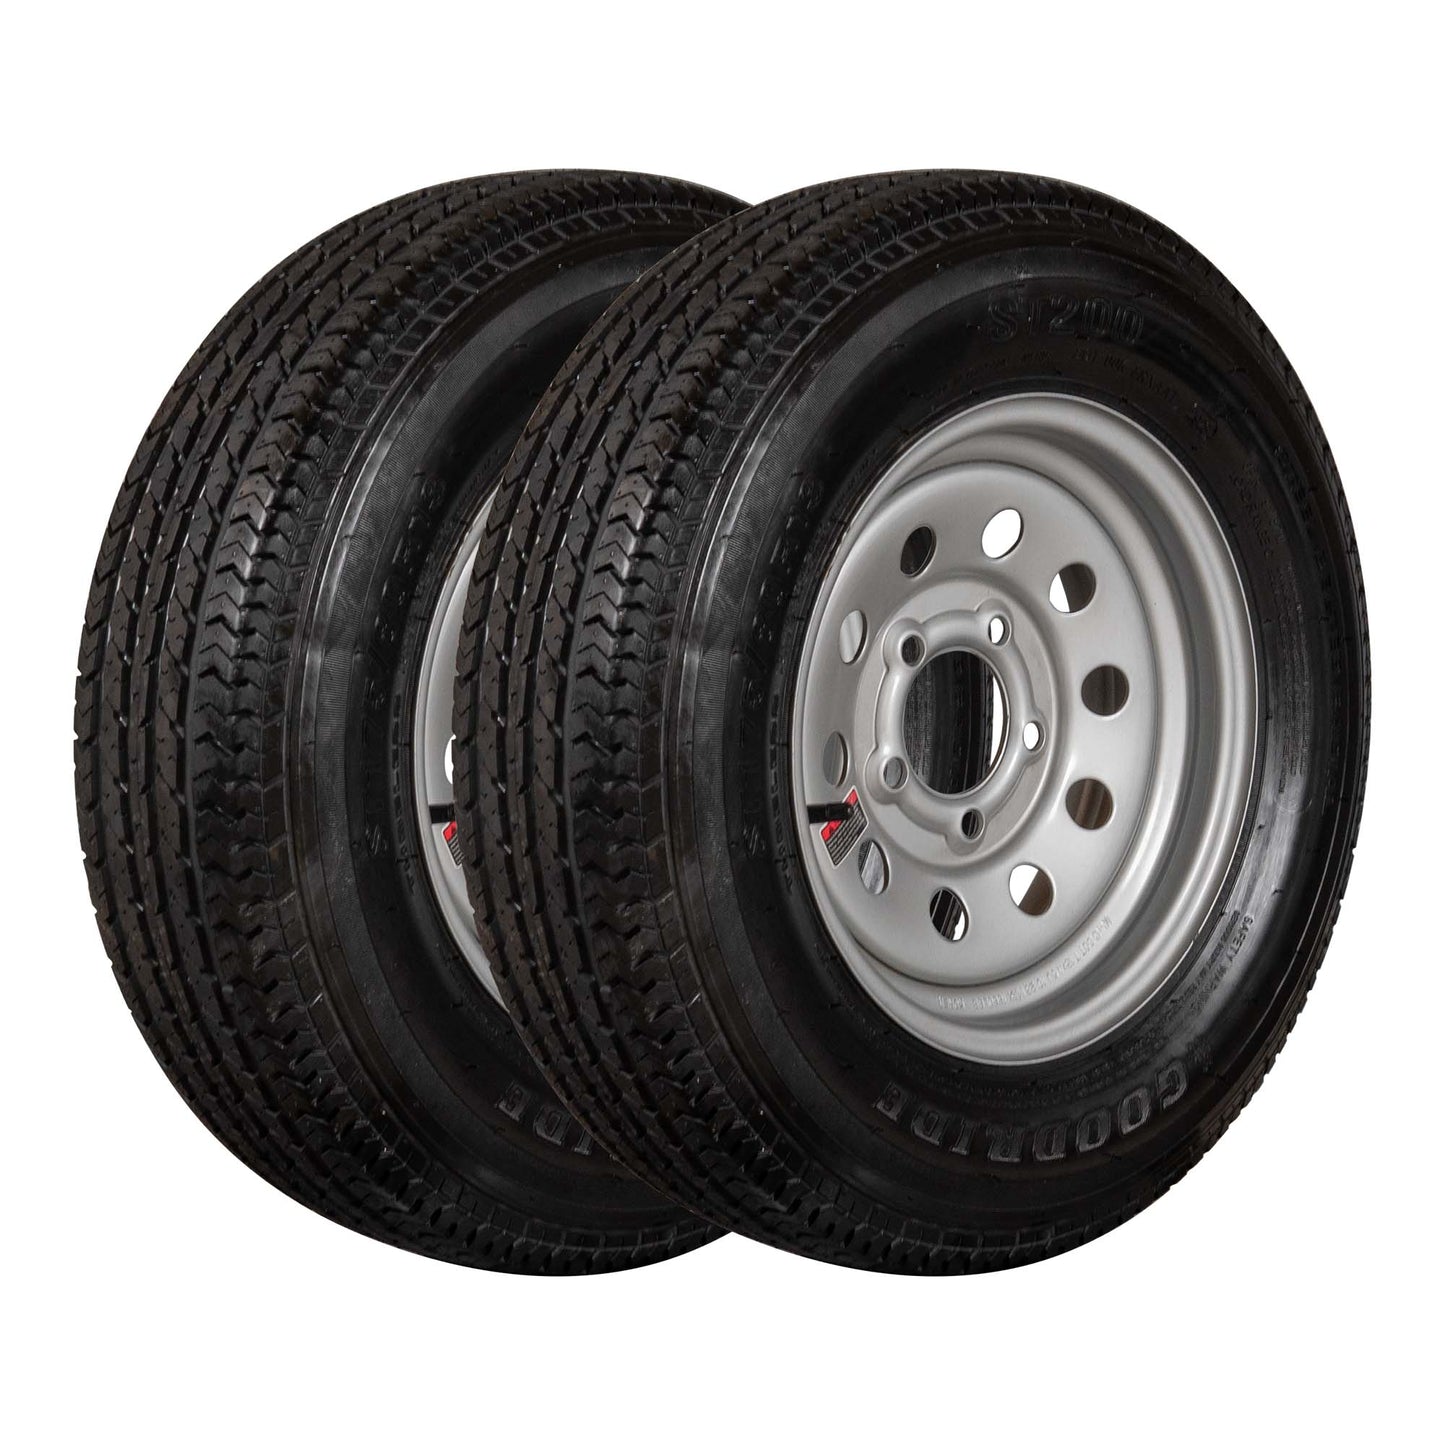 Goodride 13" 6 ply Radial Trailer Tire & Wheel - ST 175/80R13 - 5x4.5 (Silver Mod)